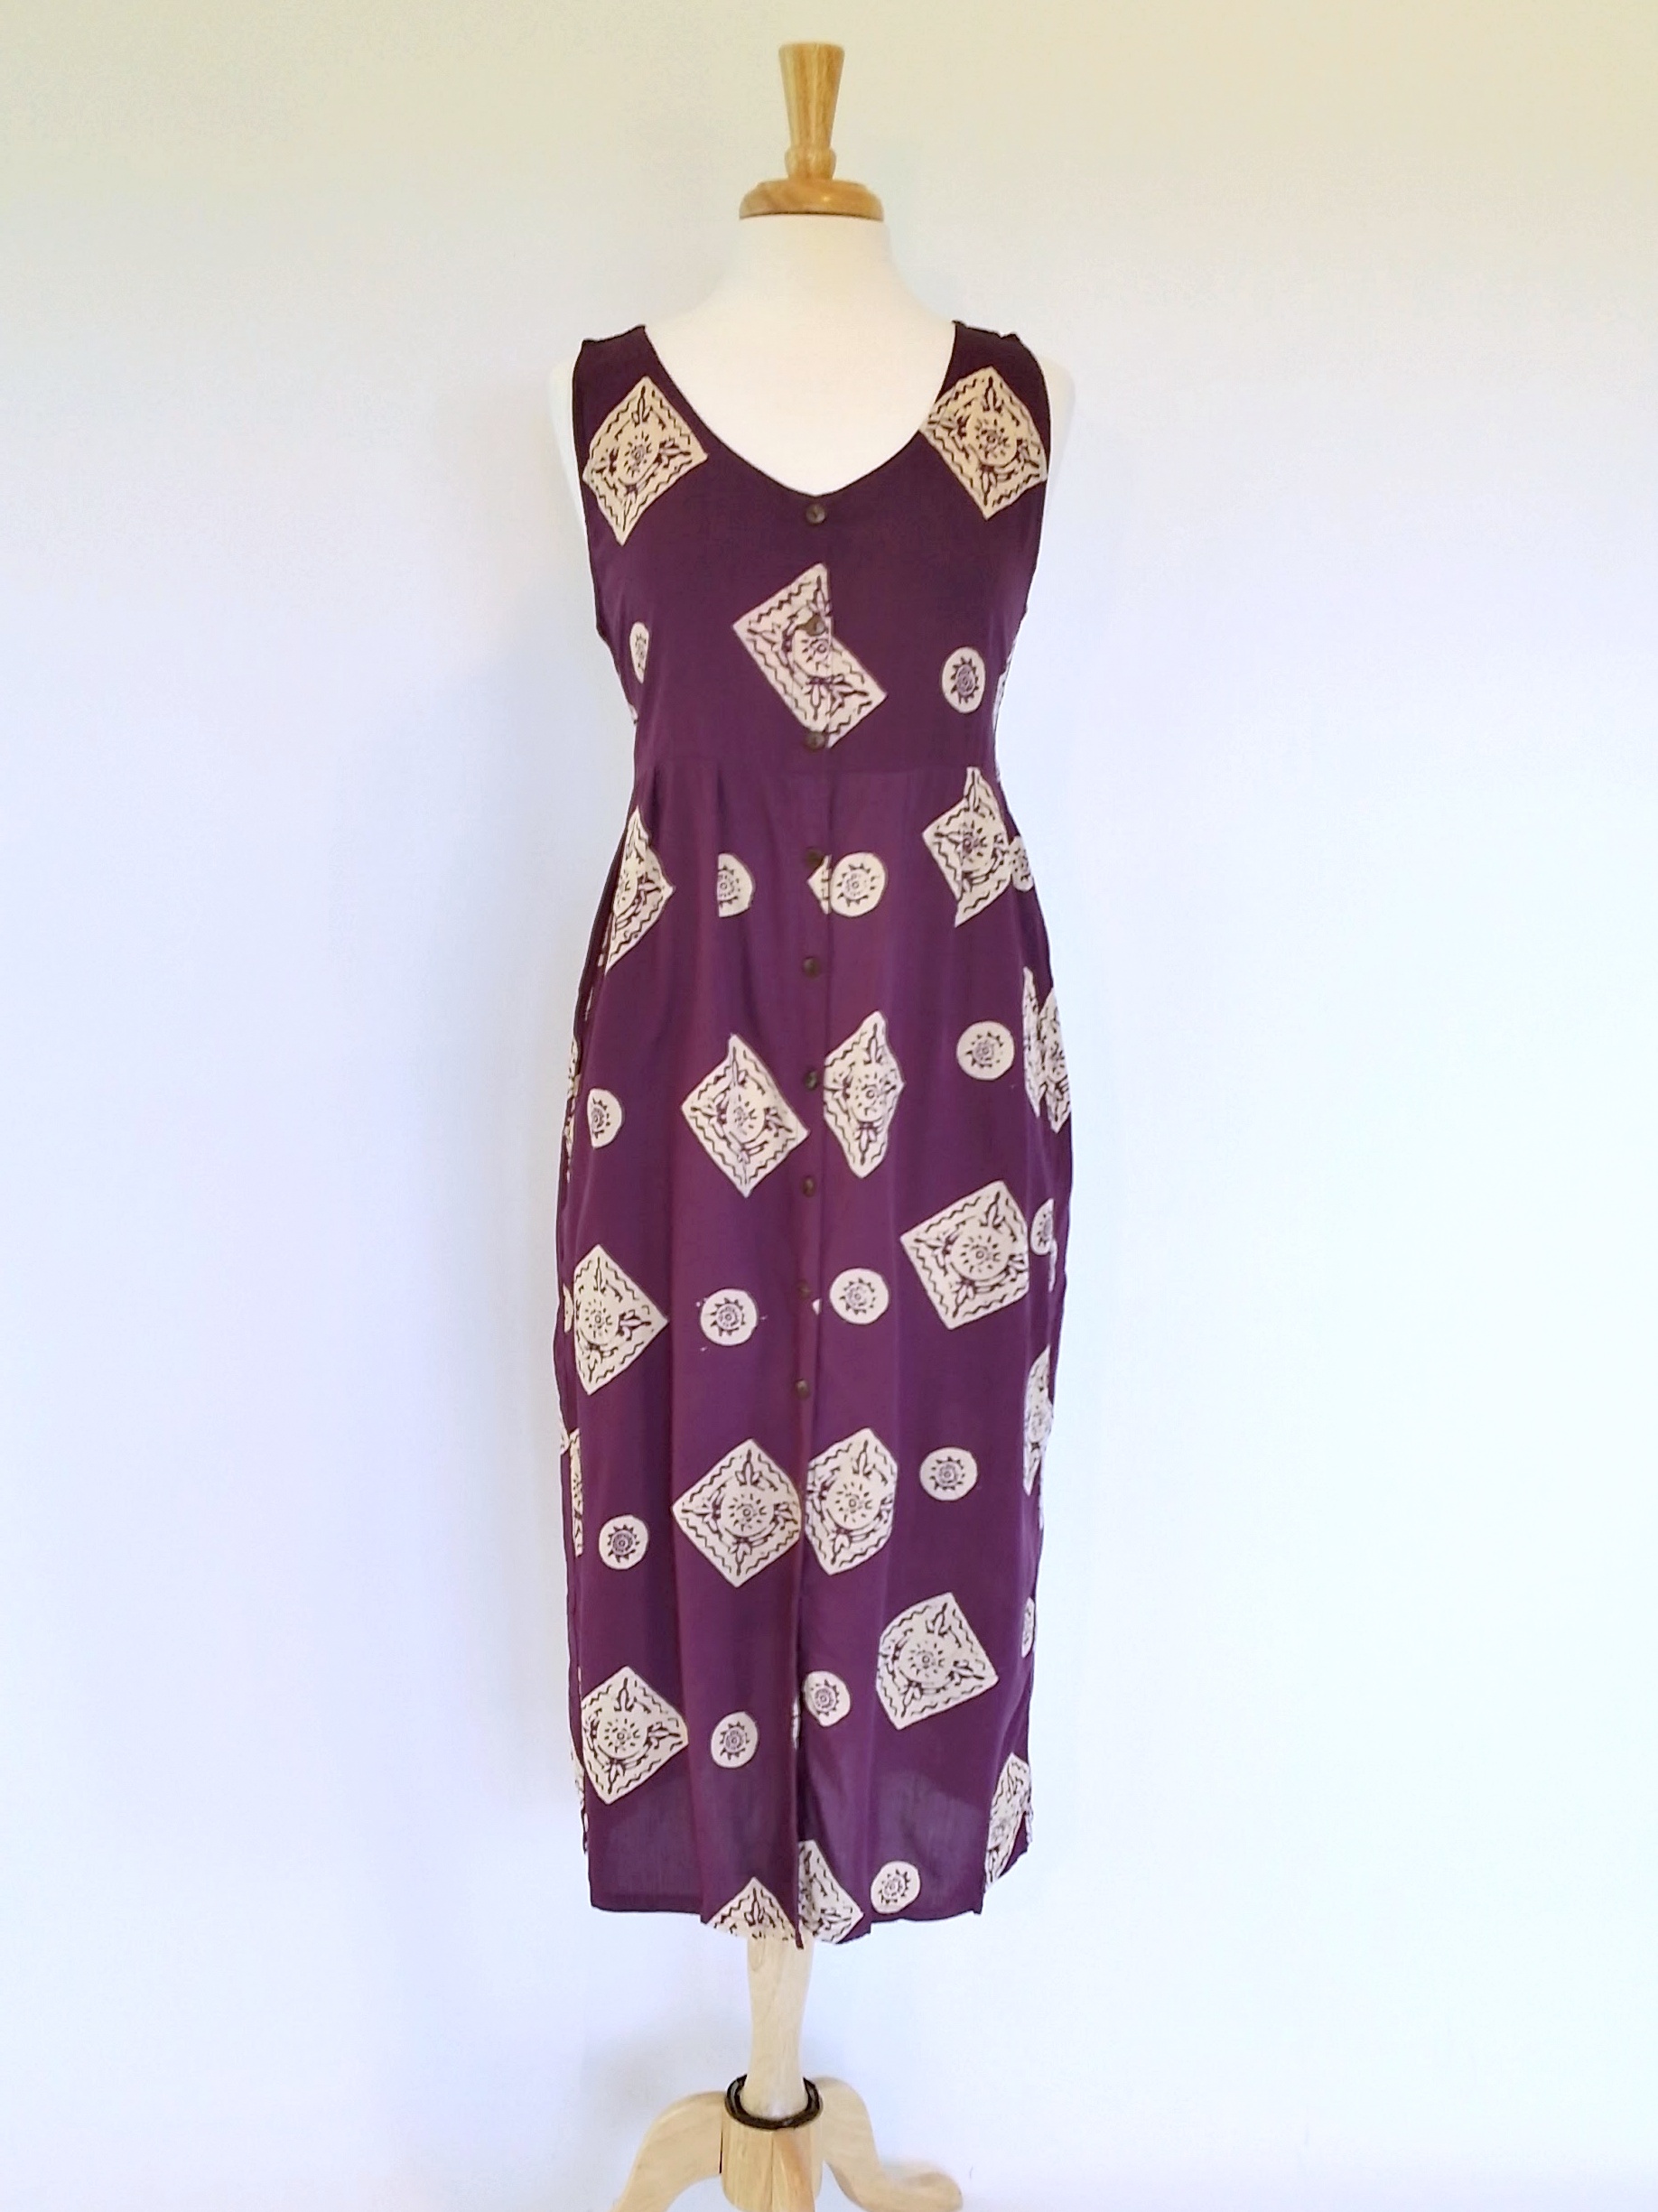 Dresses : Very Vineyard, Original Clothing for Women from Marthas Vineyard